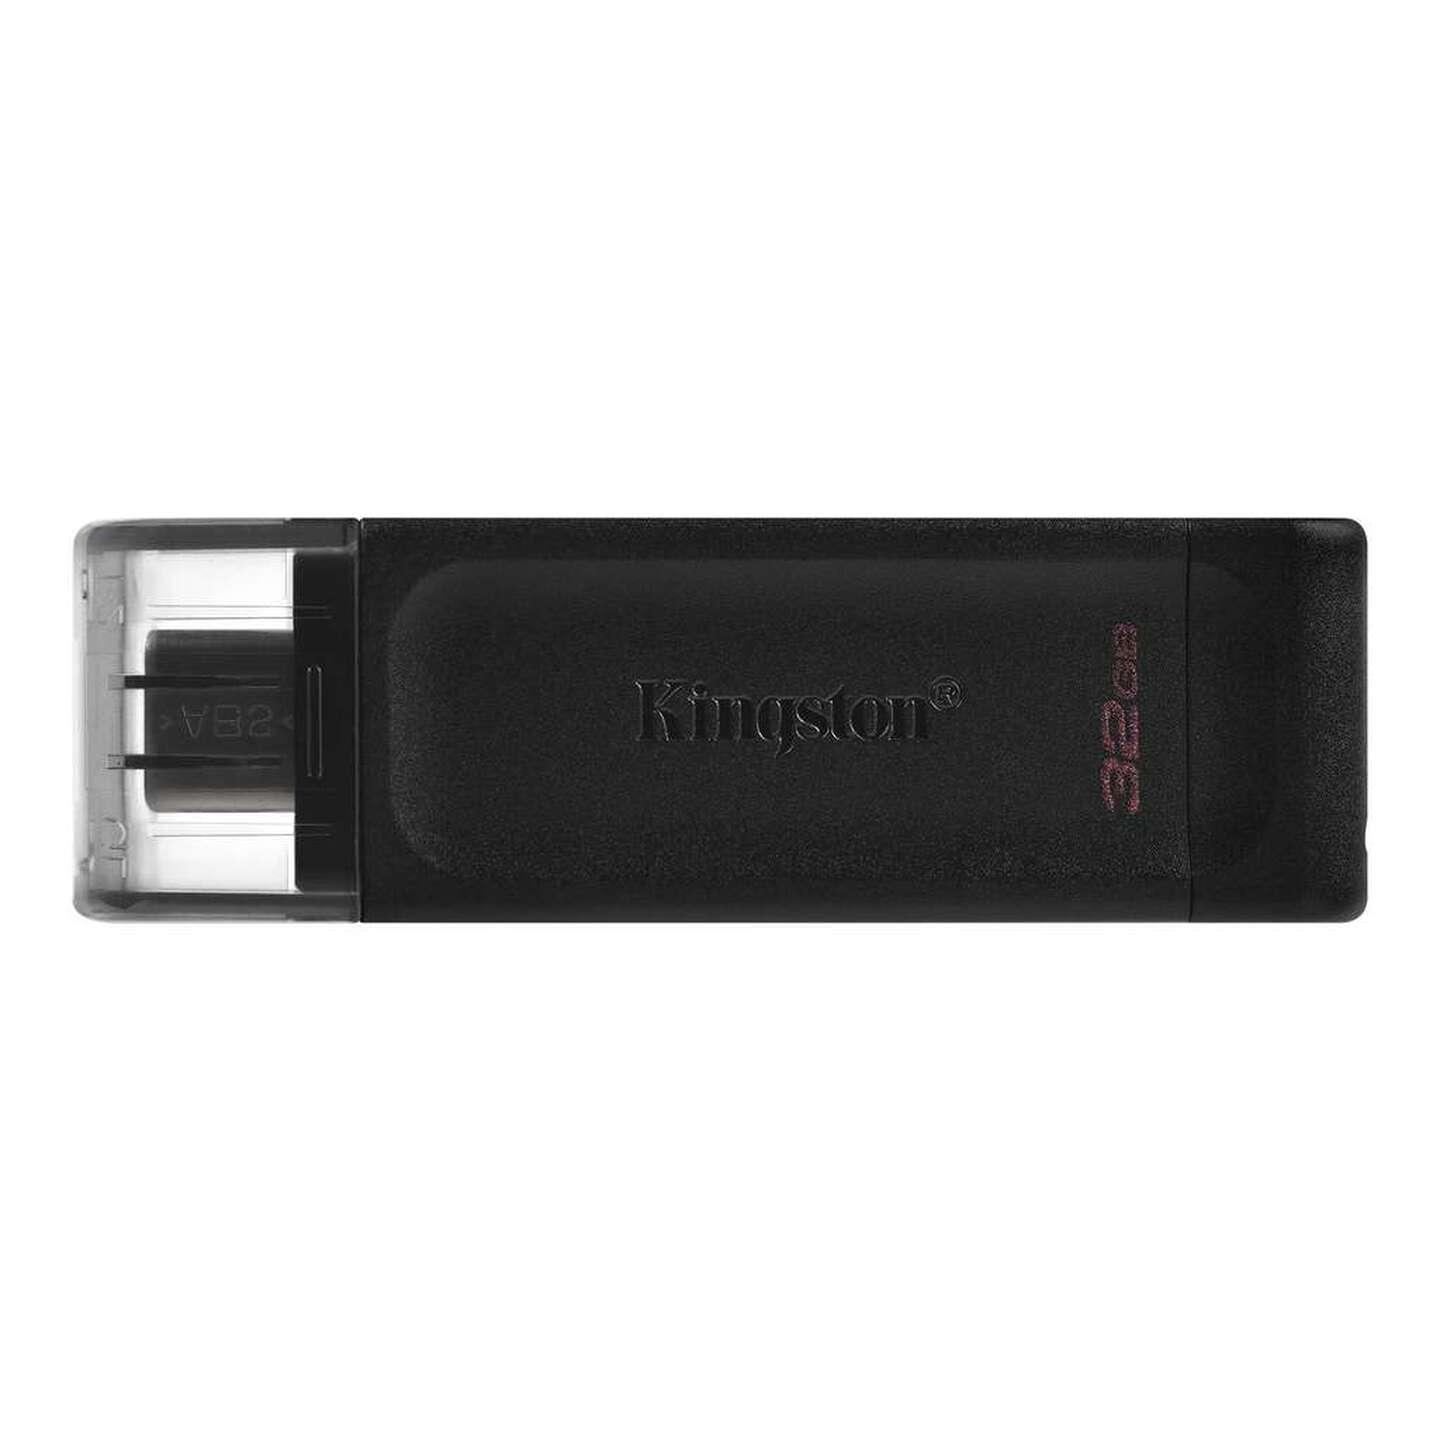 32GB USB Type C 3.2 Flash Drive